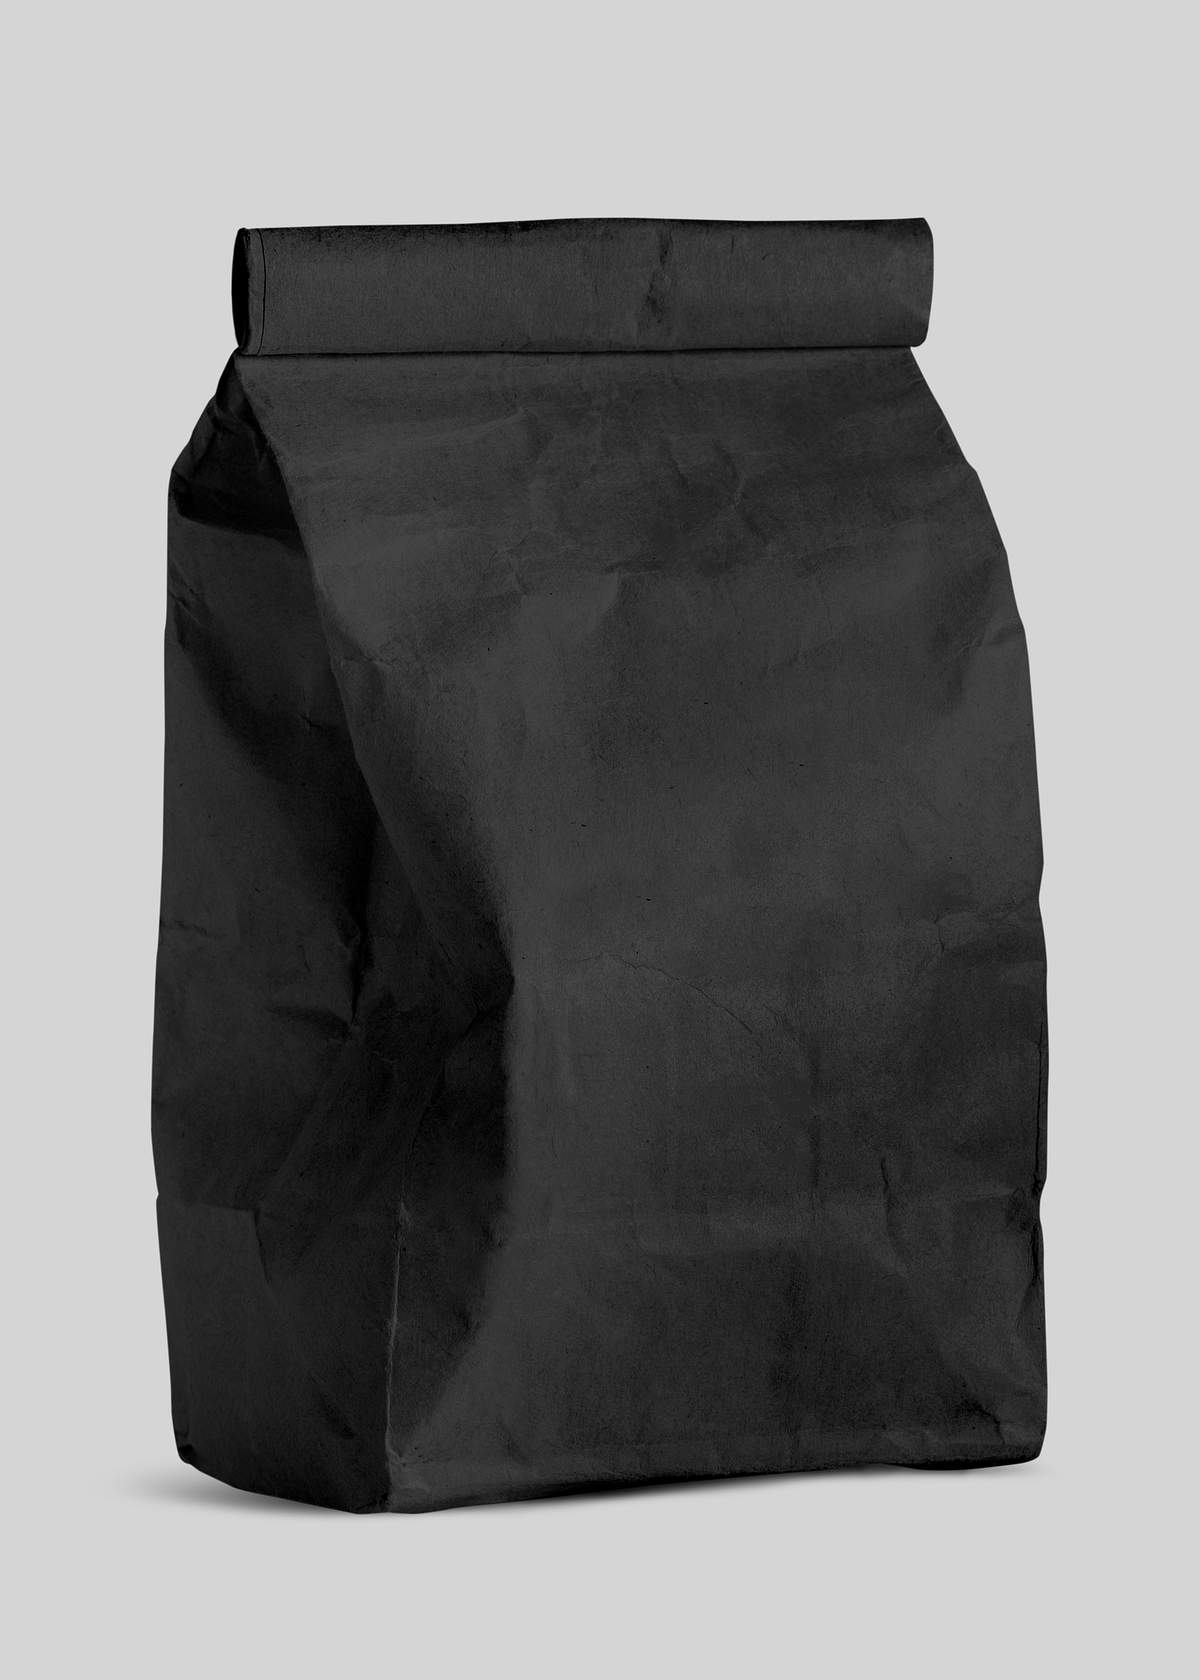 Download Rolled Black Paper Bag Mockup For Product Royalty Free Stock Psd Mockup High Resolution Design